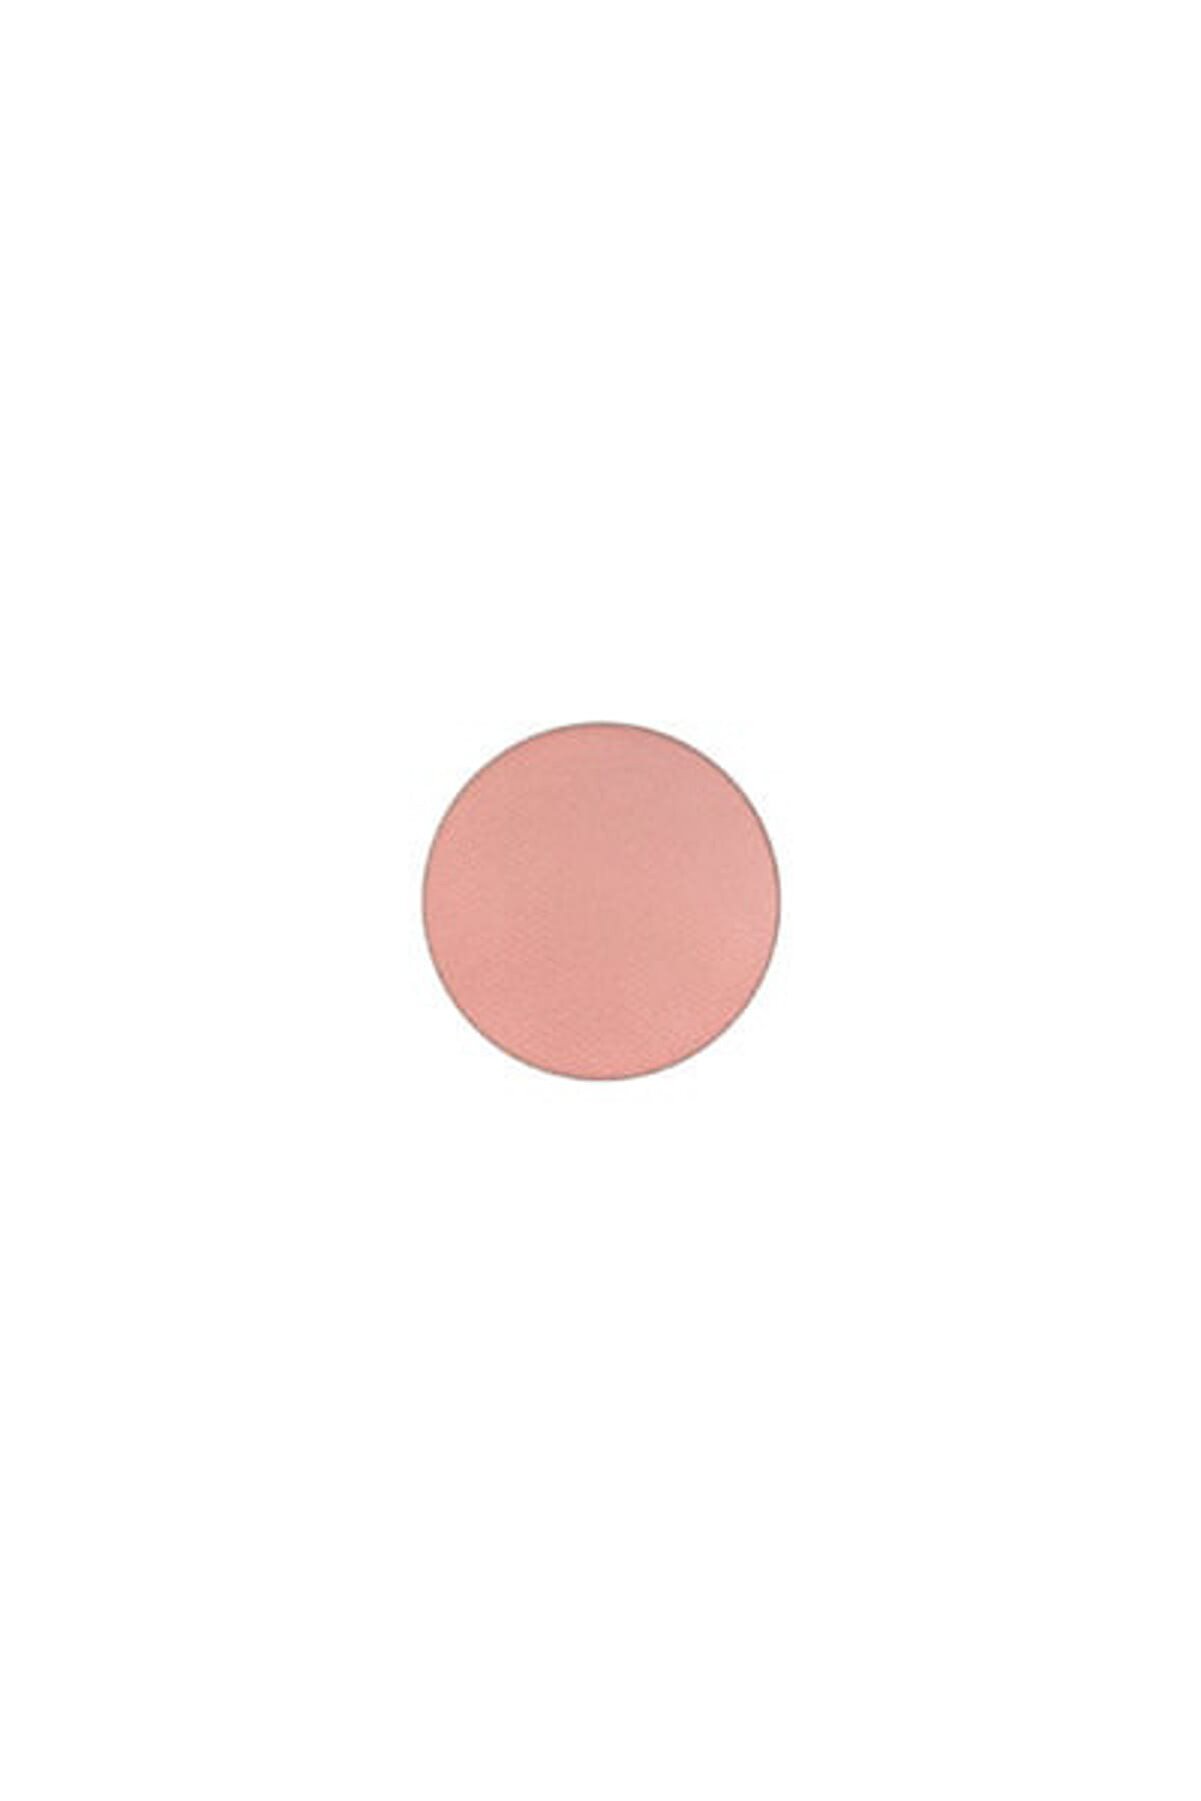 Mac Refill Allık - Powder Blush Pro Palette Refill Pan Gingerly 6 g 773602038886